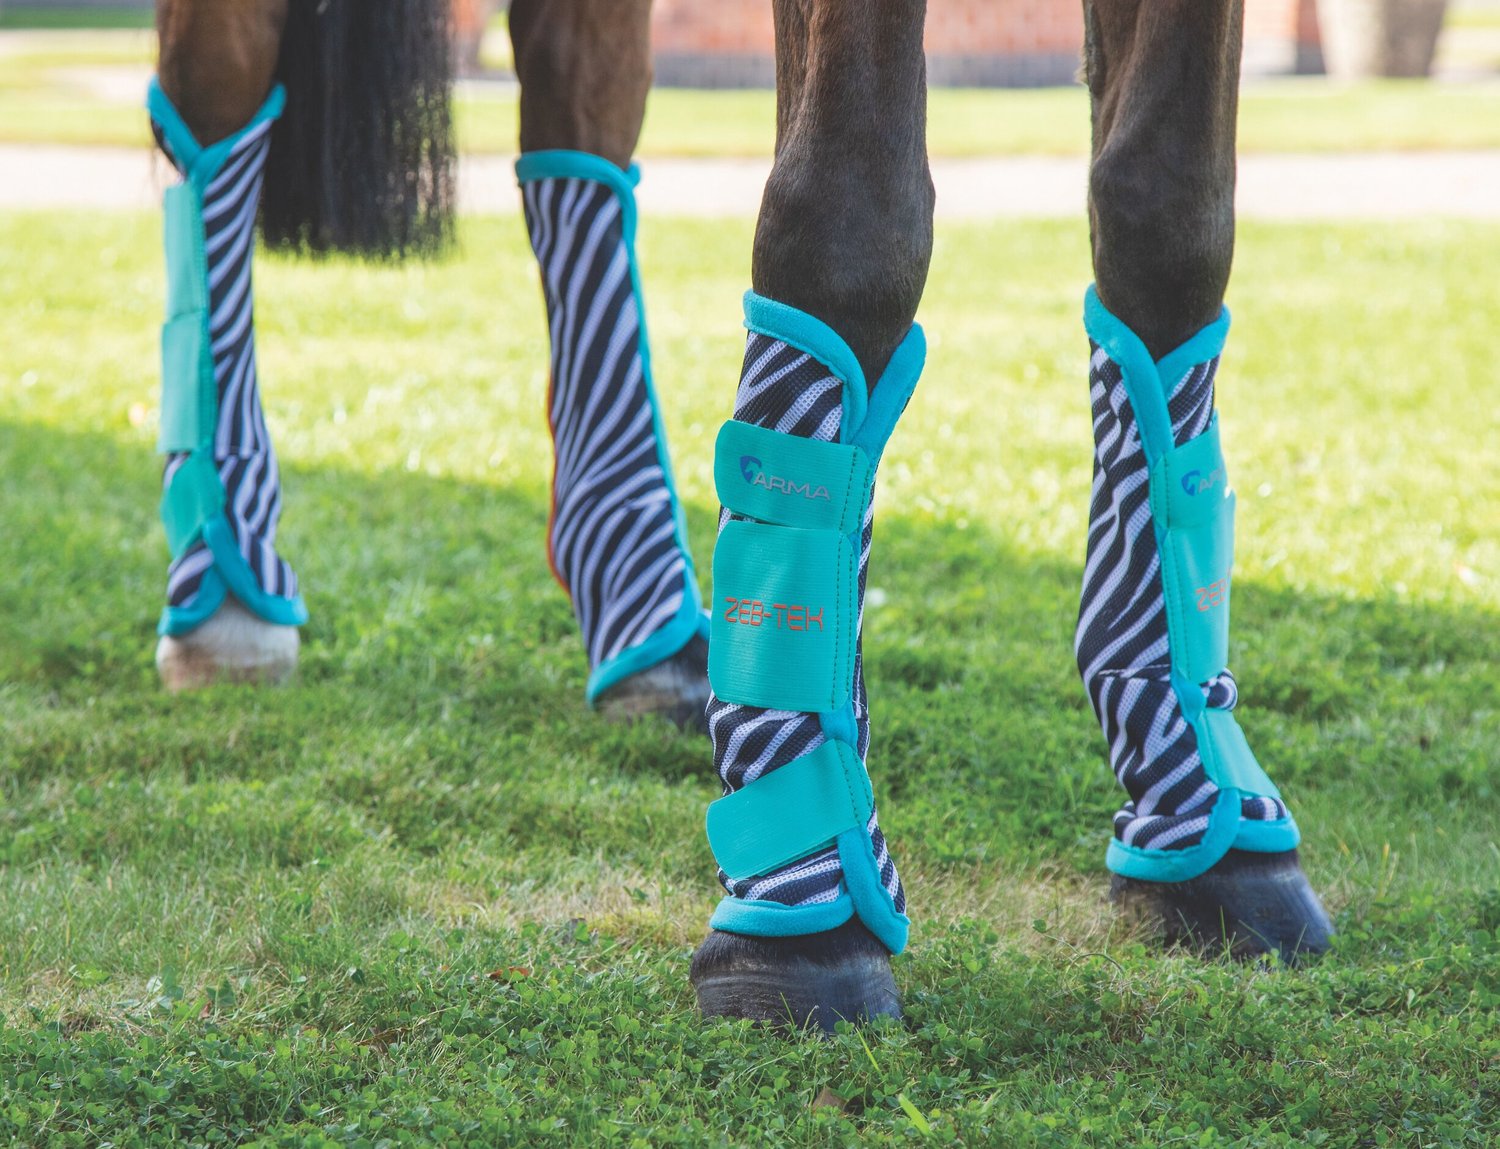 Shires Equestrian Products ARMA Zeb-Tek Fly TU Horse Socks